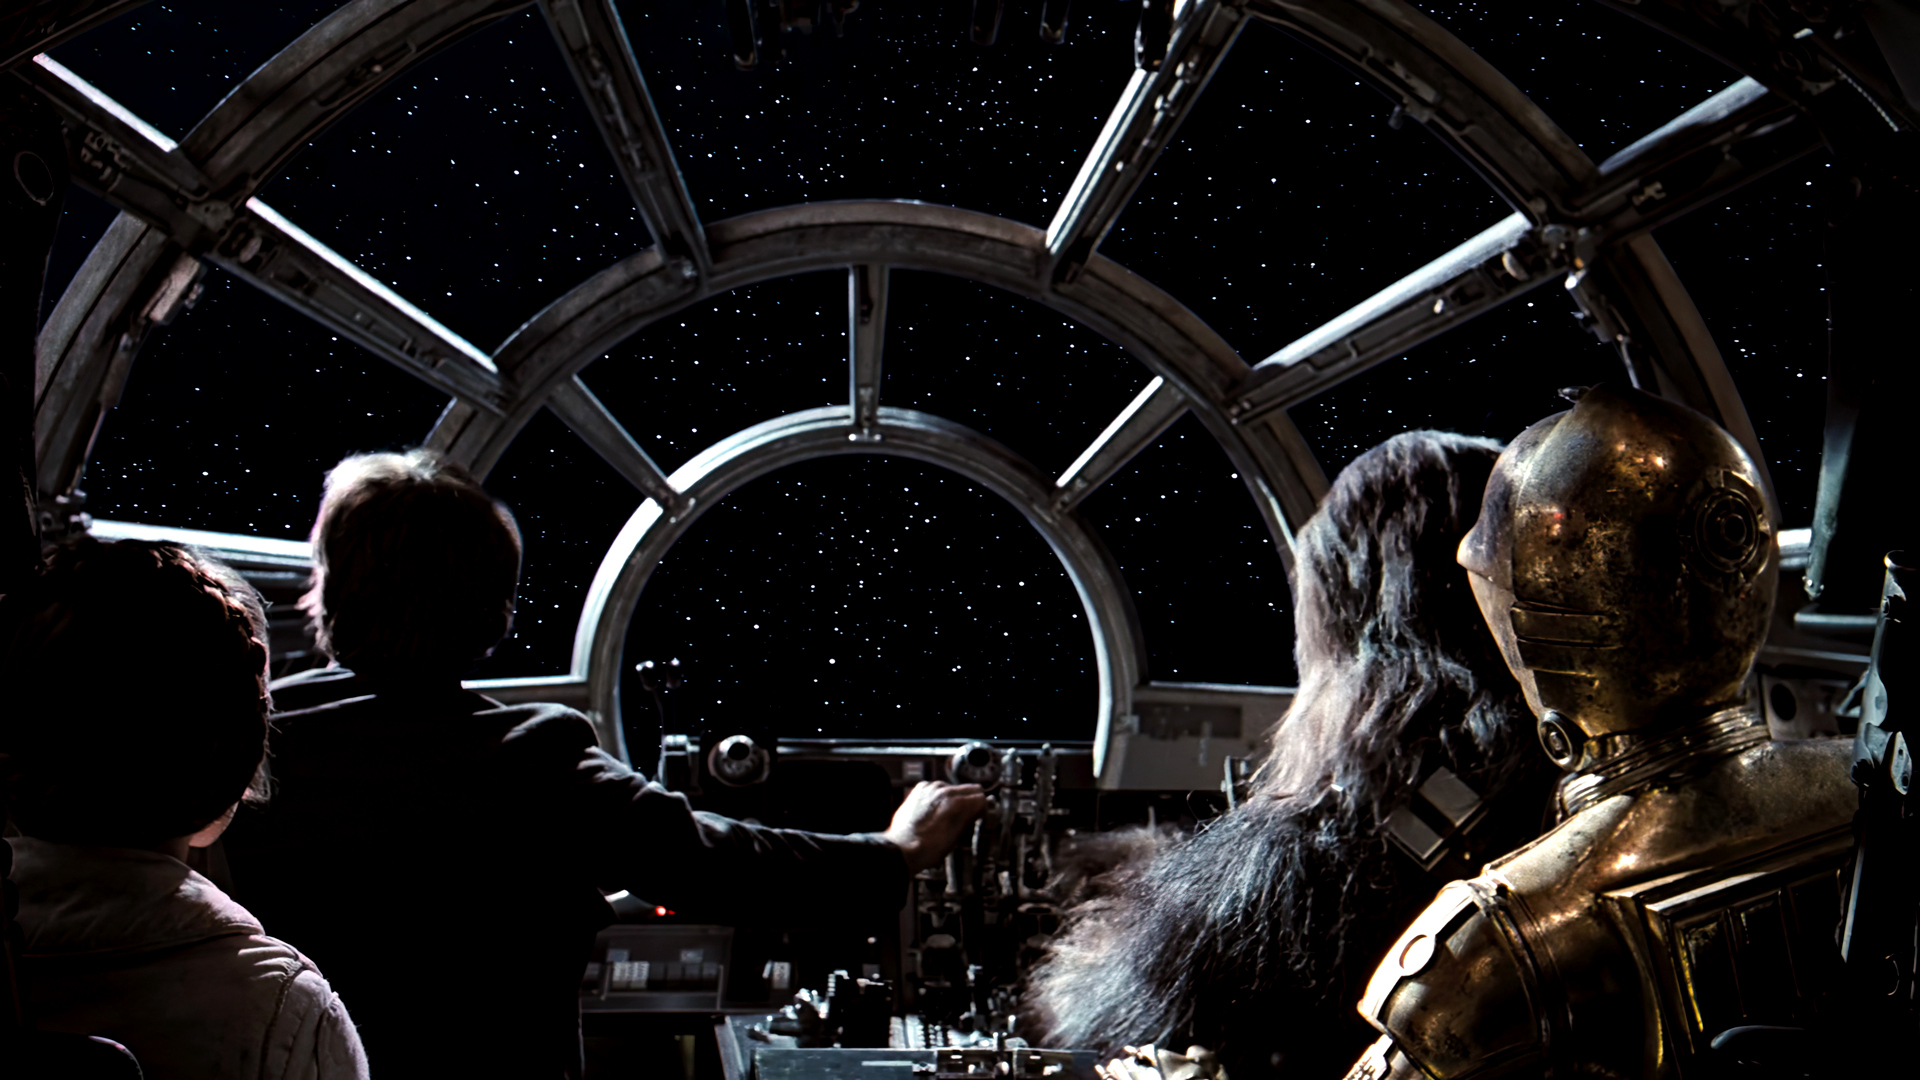 People 1920x1080 Star Wars: Episode V - The Empire Strikes Back movies film stills Star Wars Millennium Falcon C-3PO Han Solo Chewbacca Leia Organa stars space